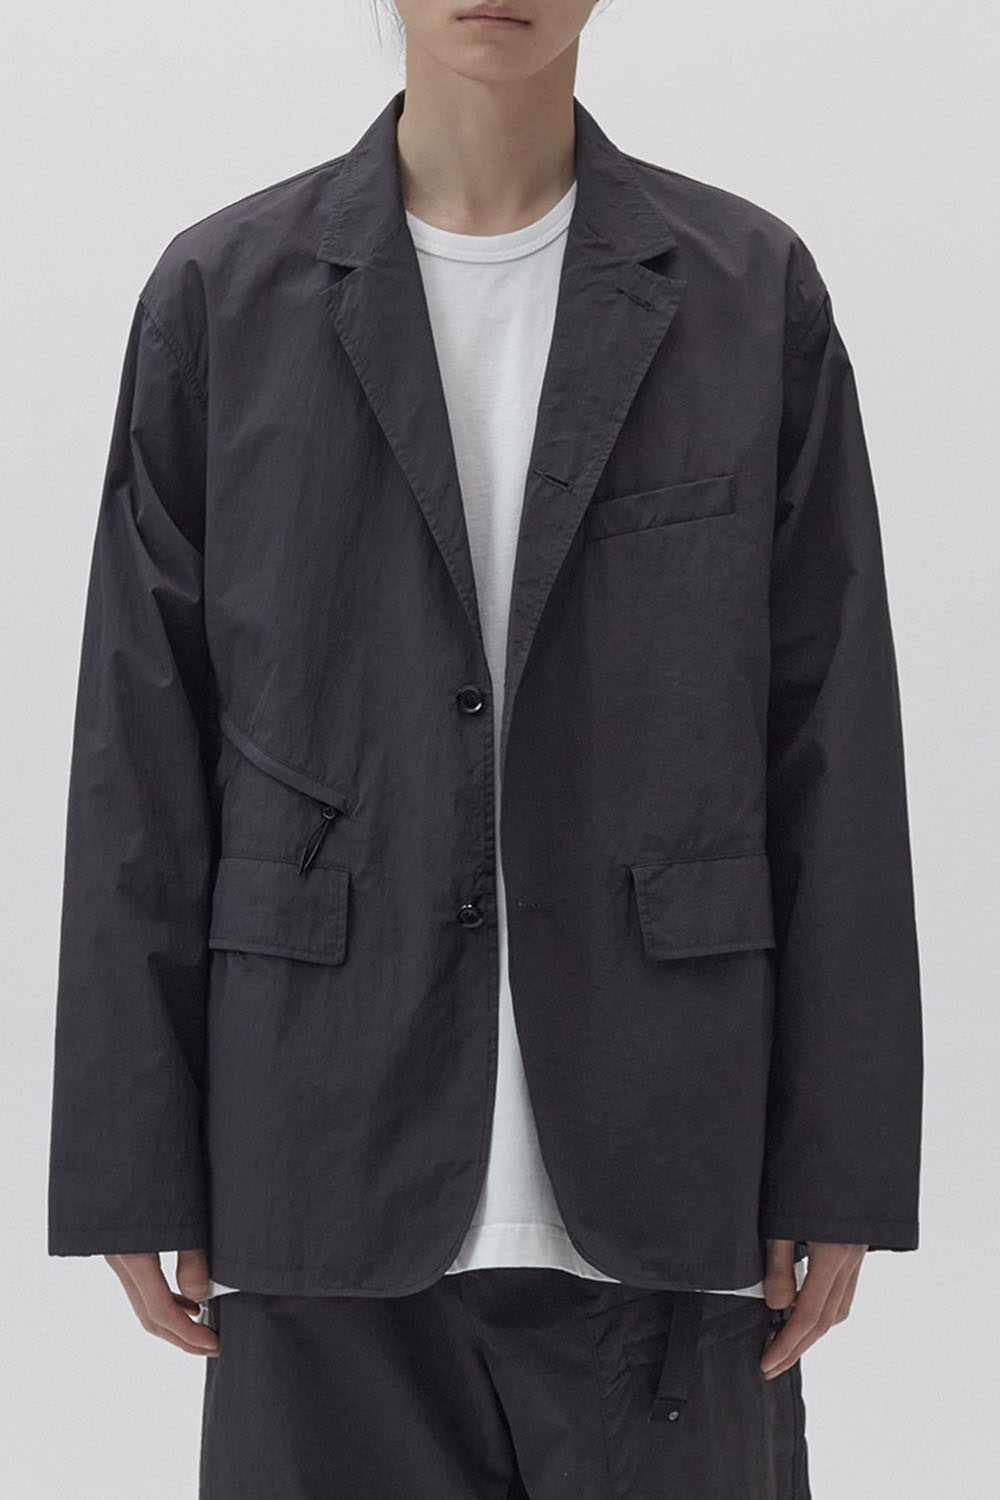 Uniform Jacket_Charcoal Grey